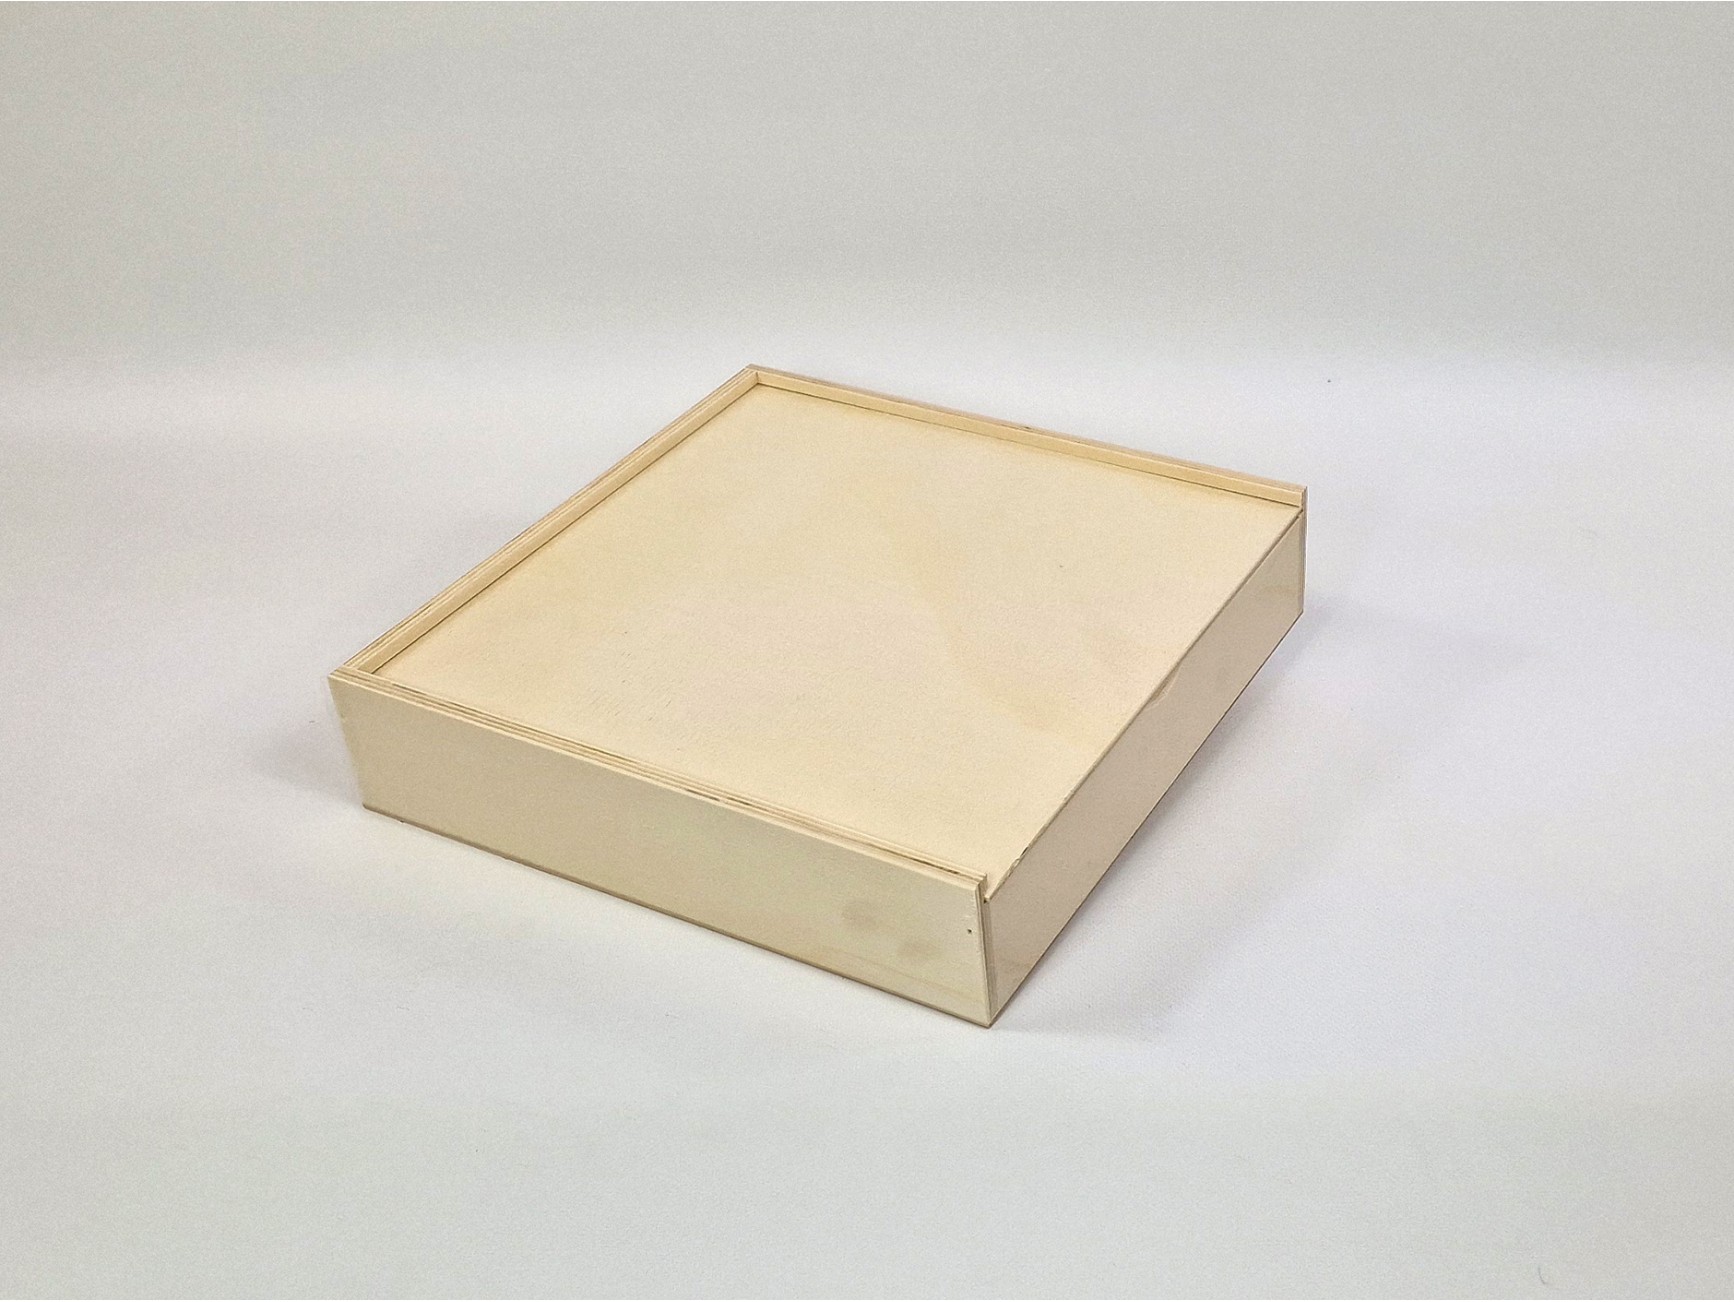 Caja madera 45 x 28 x 6,2 cm. con Divisiones